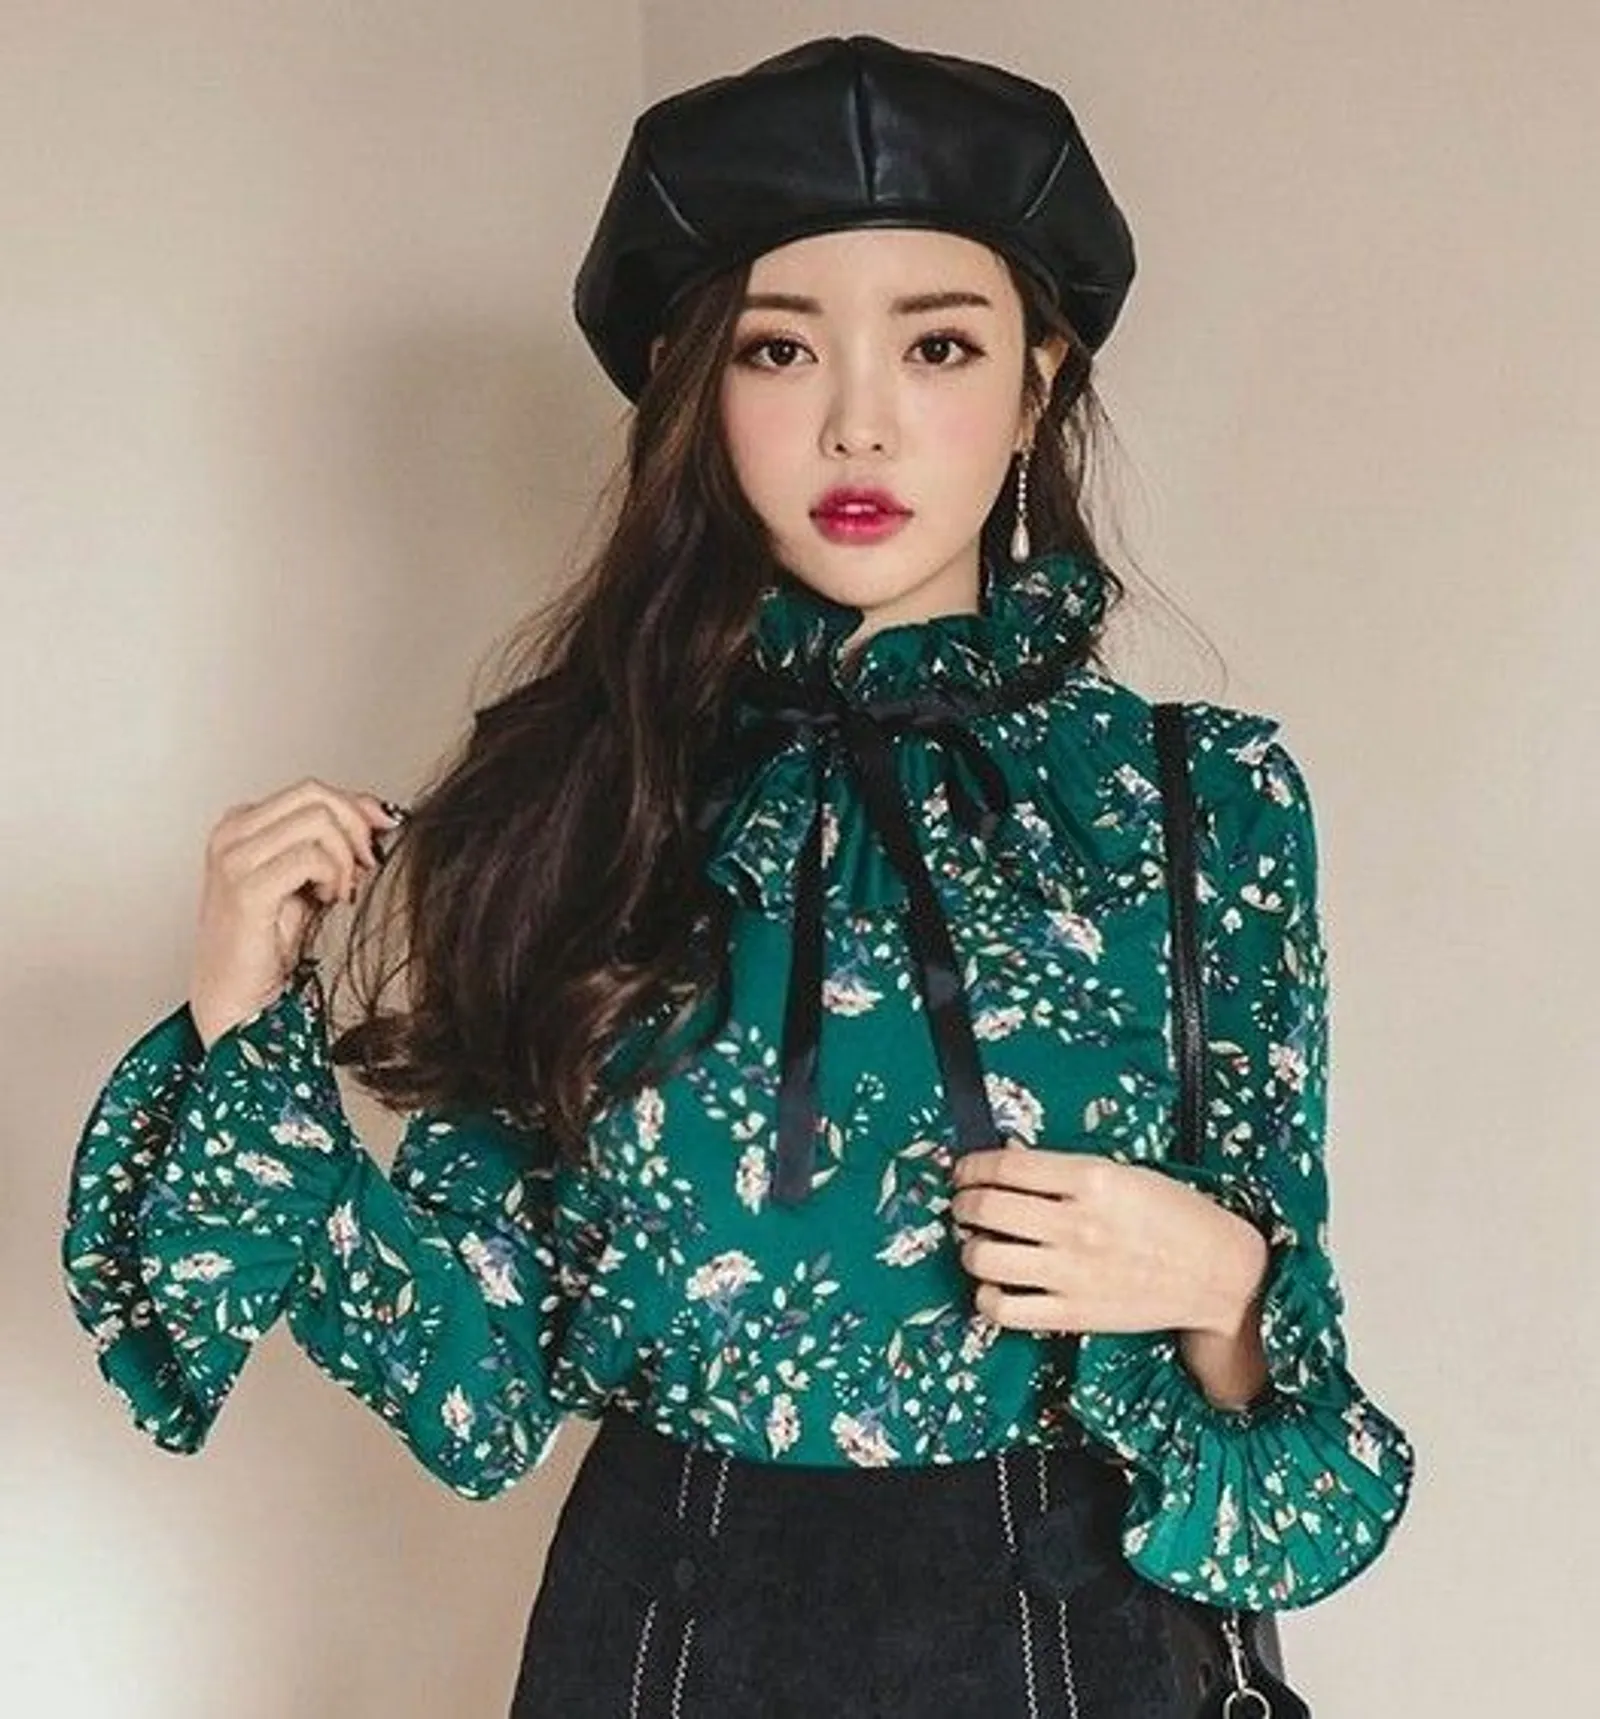 Tiru 5 Style Fashion A la Cewek Korea Ini Biar Keliatan Makin Keren